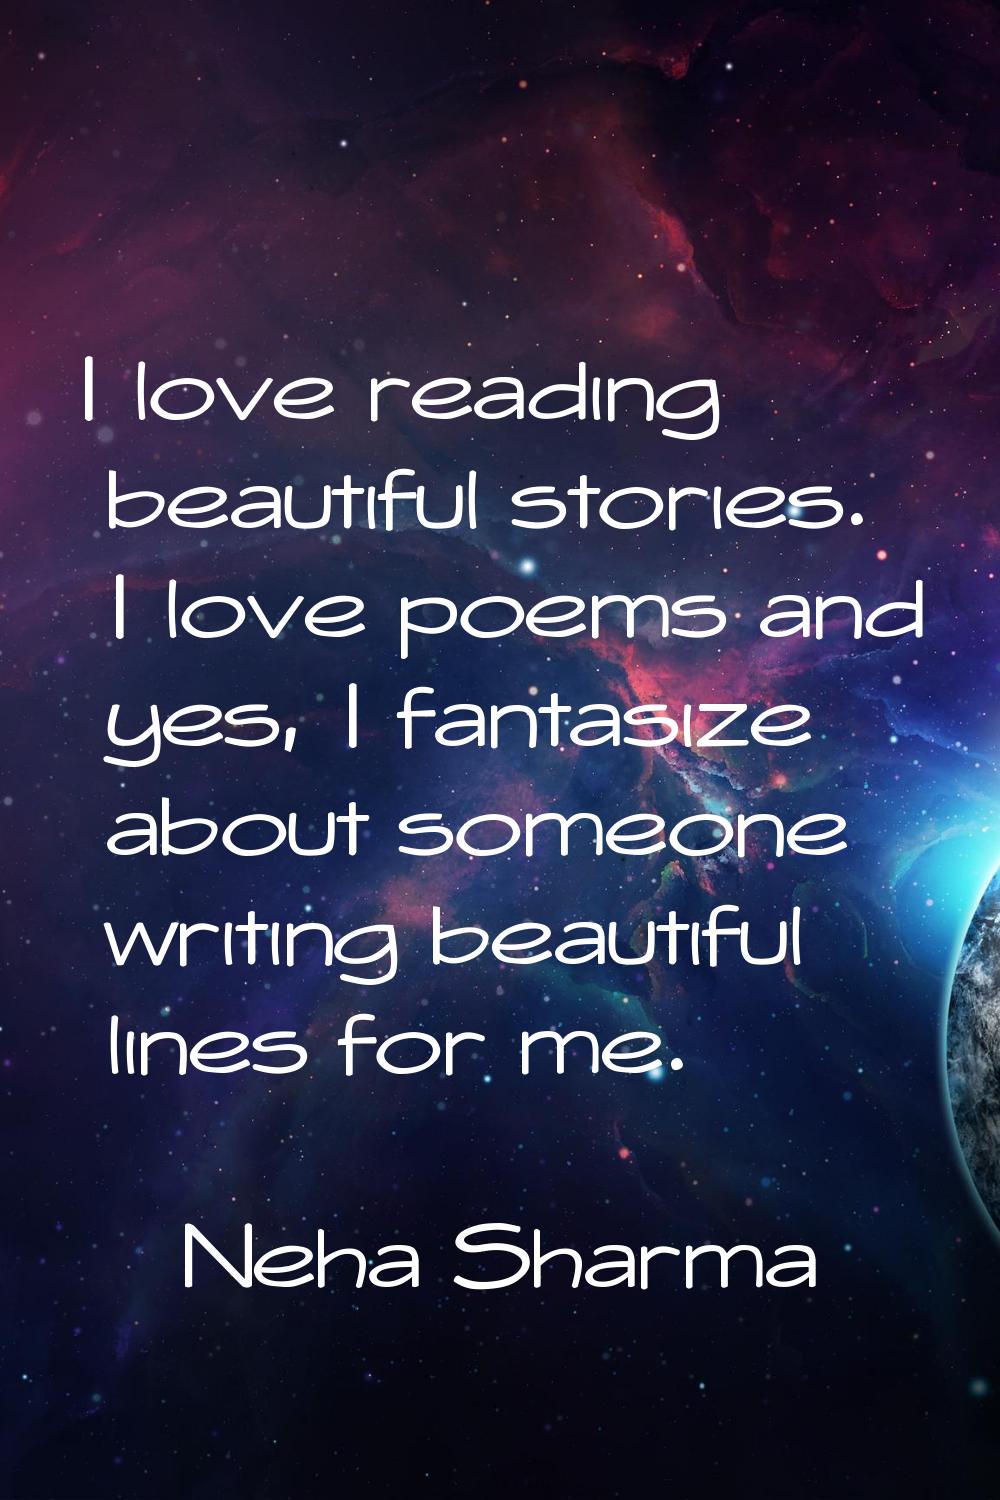 I love reading beautiful stories. I love poems and yes, I fantasize about someone writing beautiful